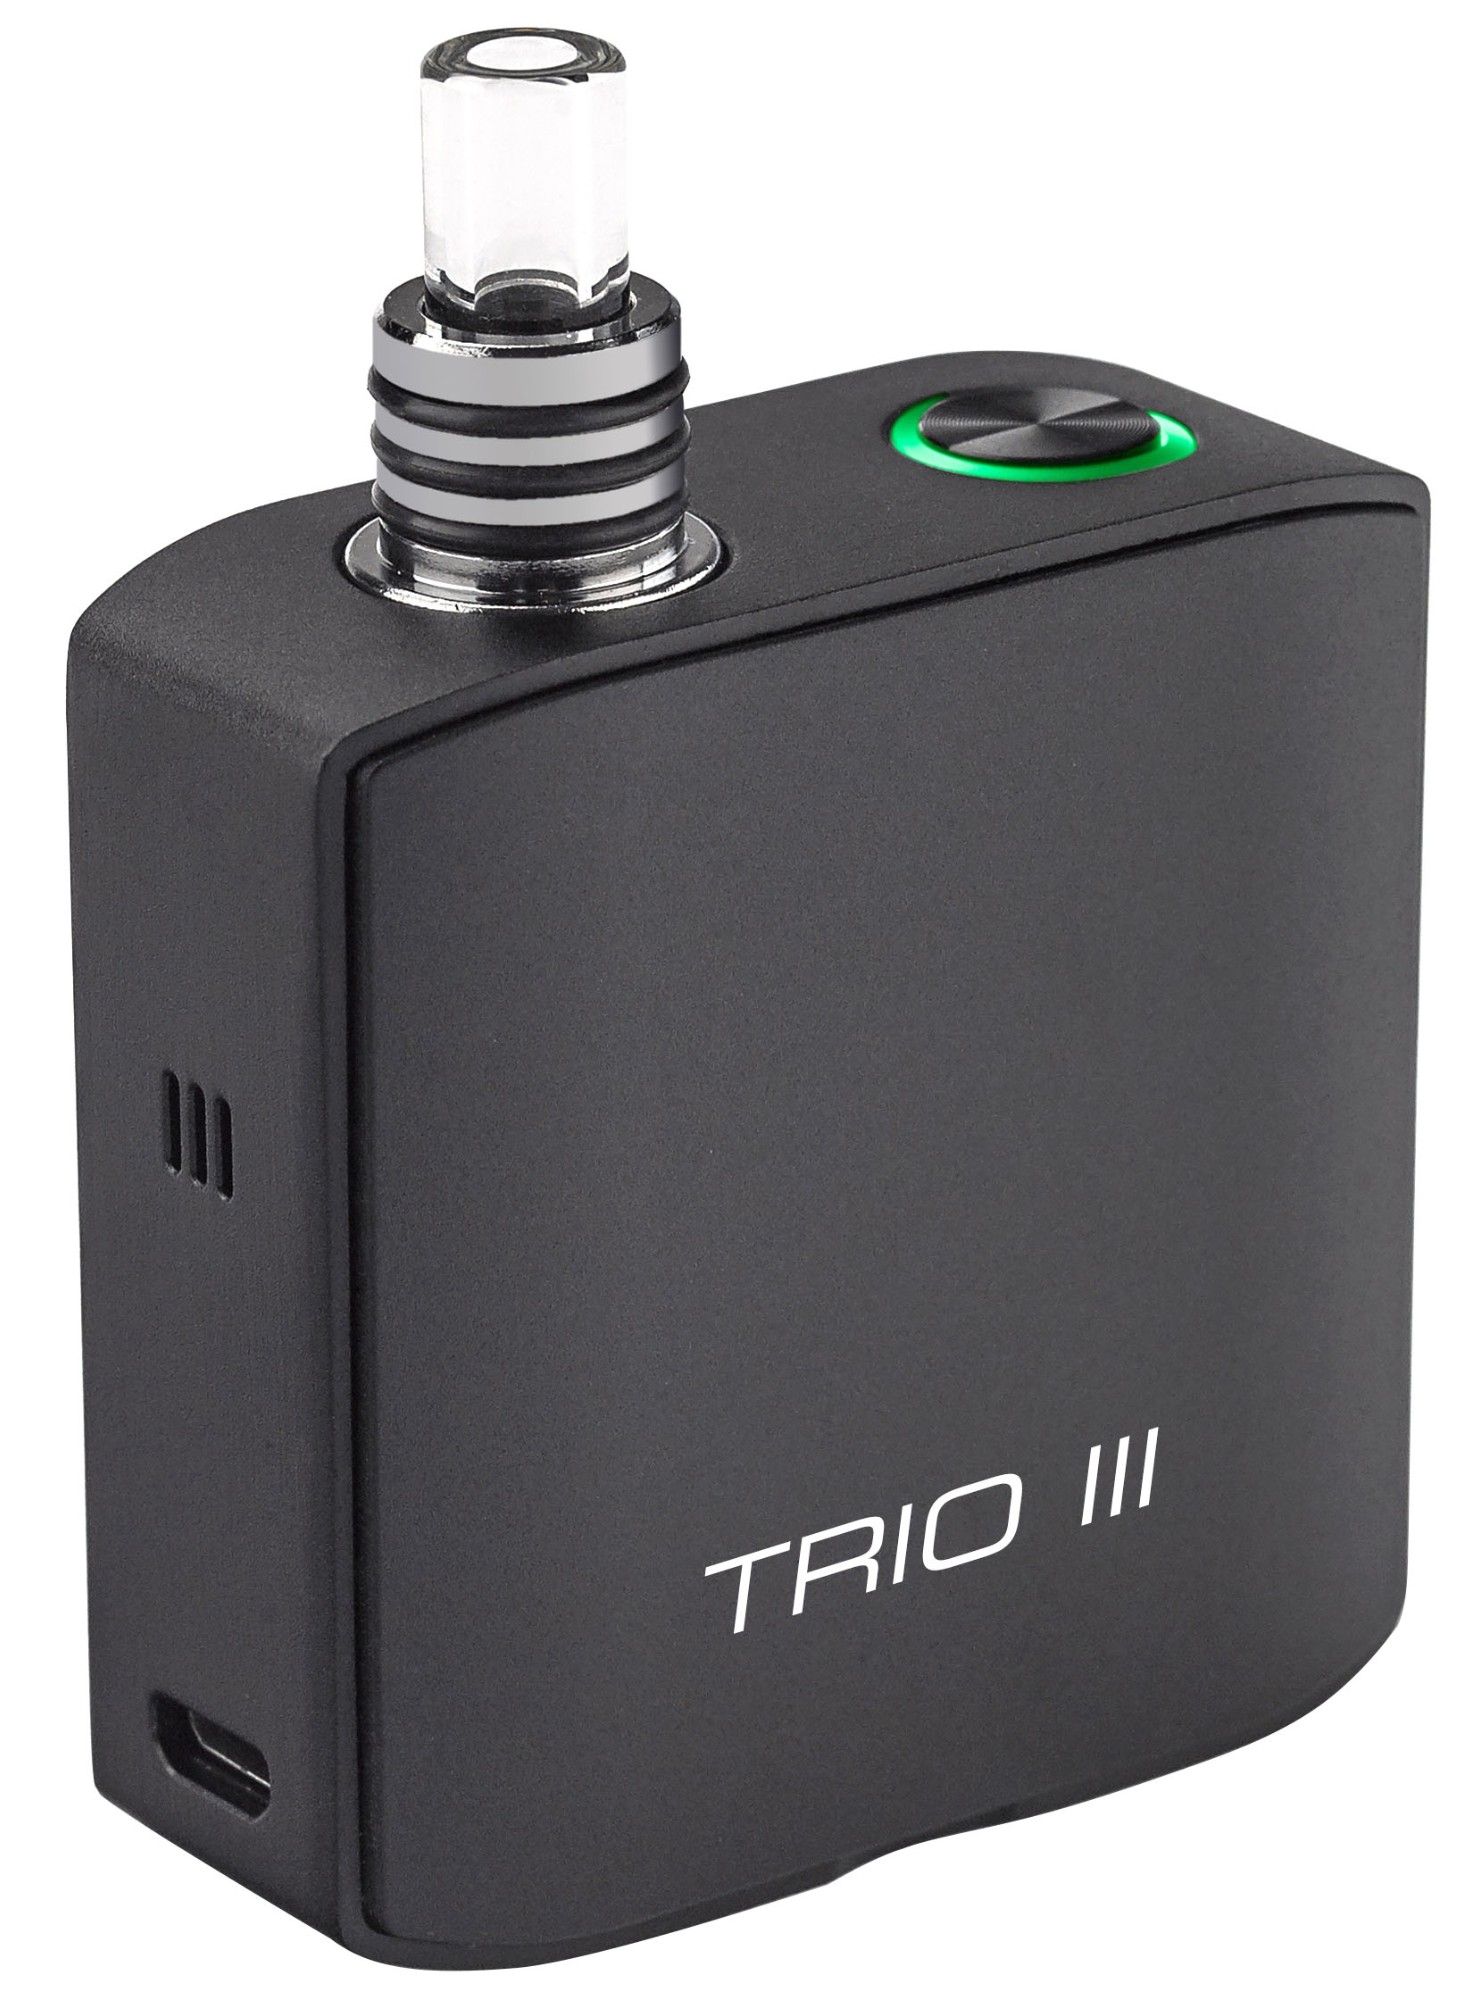 TRIO III vaporizer